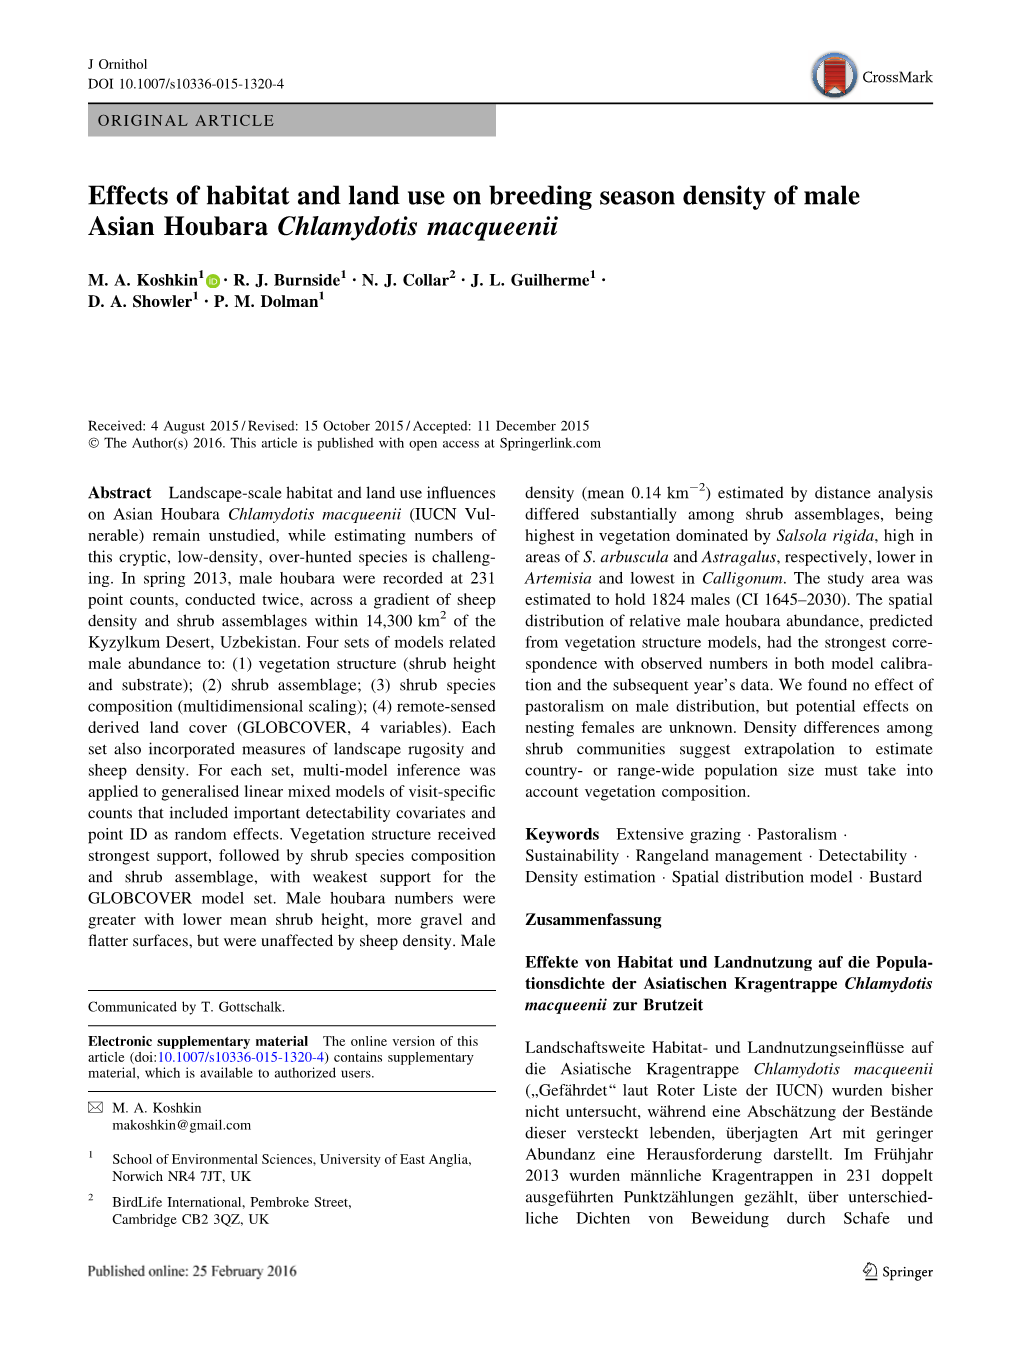 Effects of Habitat and Land Use on Breeding Season Density of Male Asian Houbara Chlamydotis Macqueenii